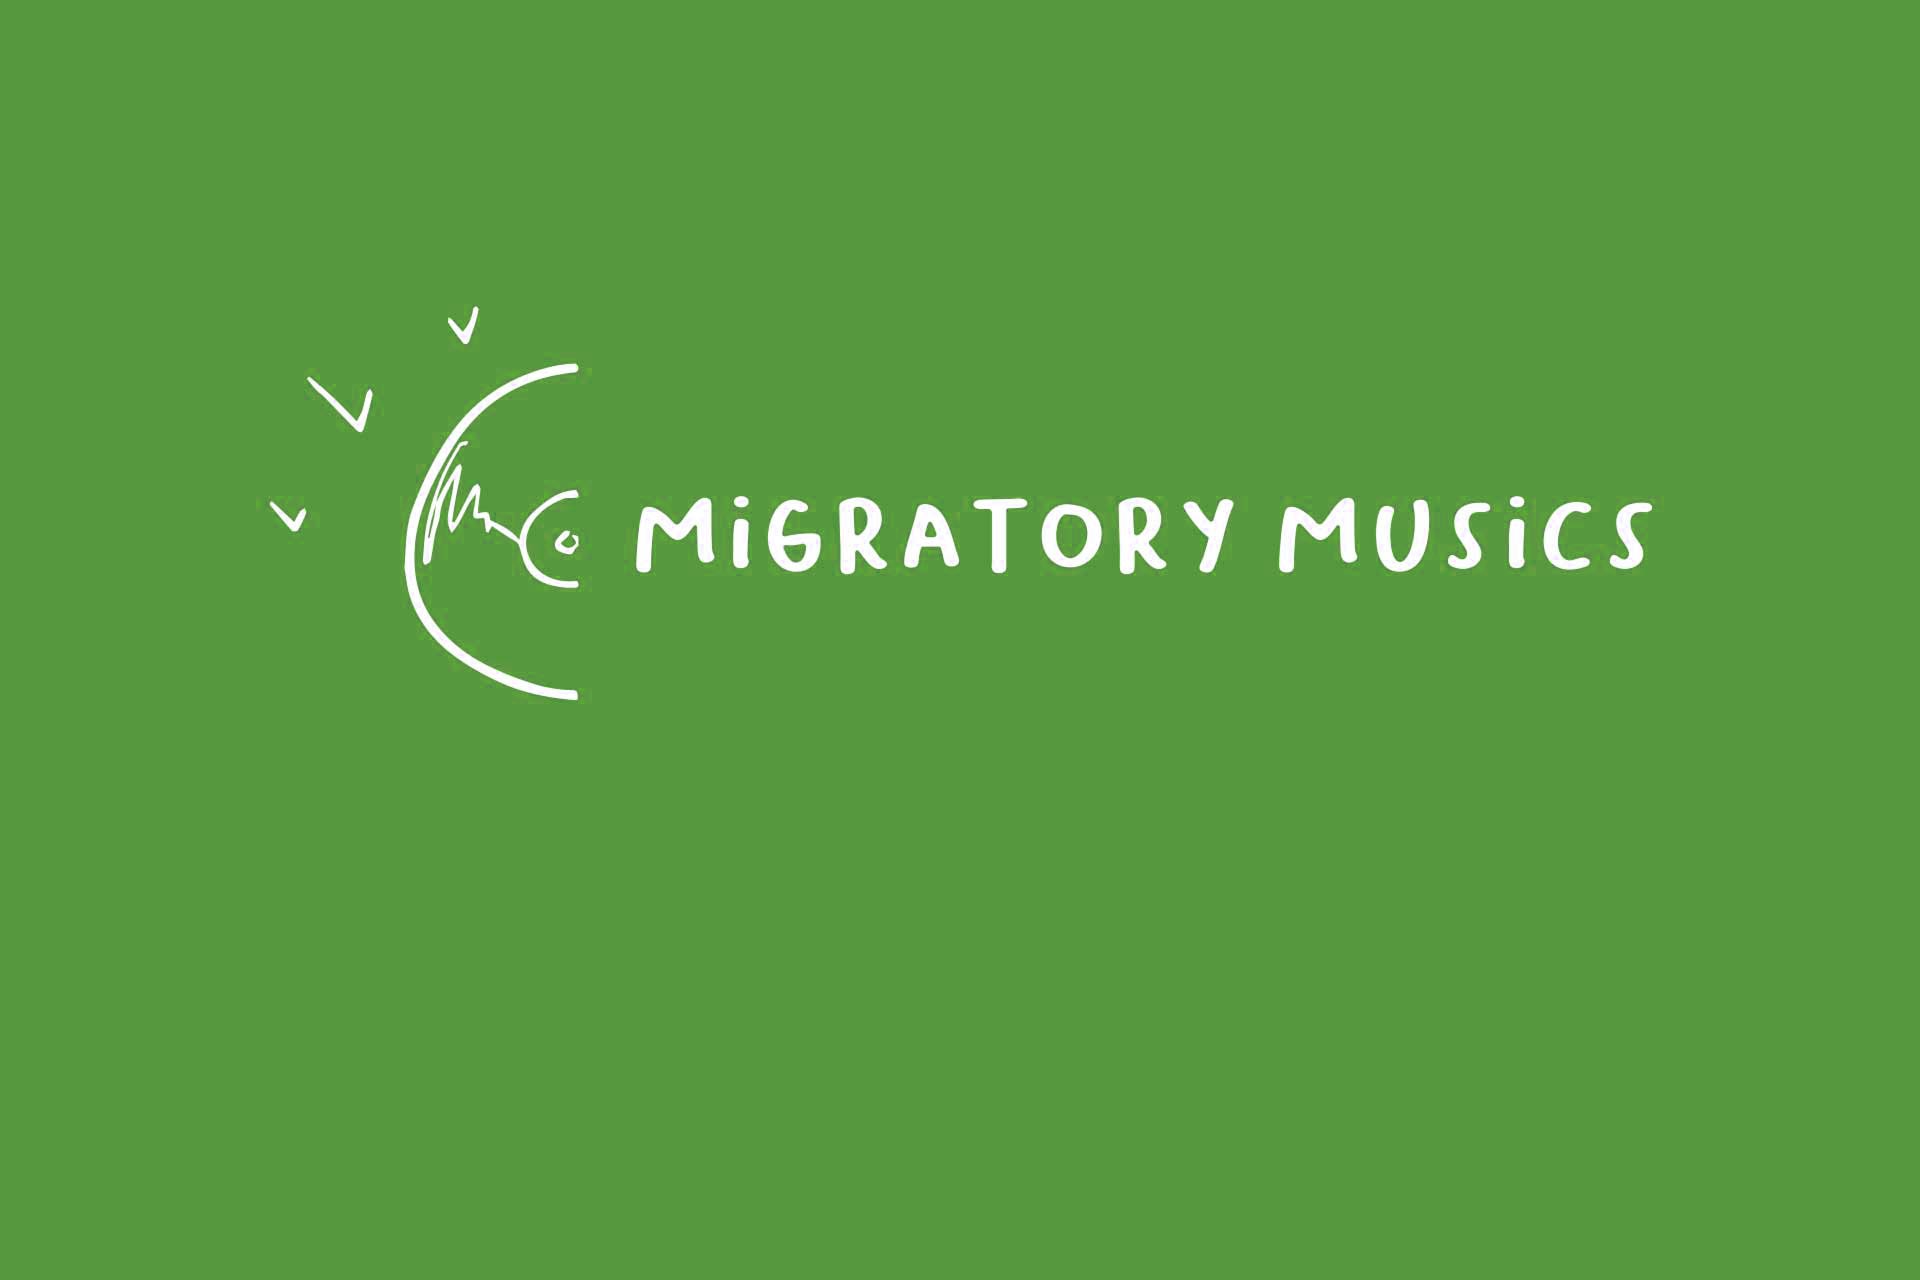 Migratory Musics